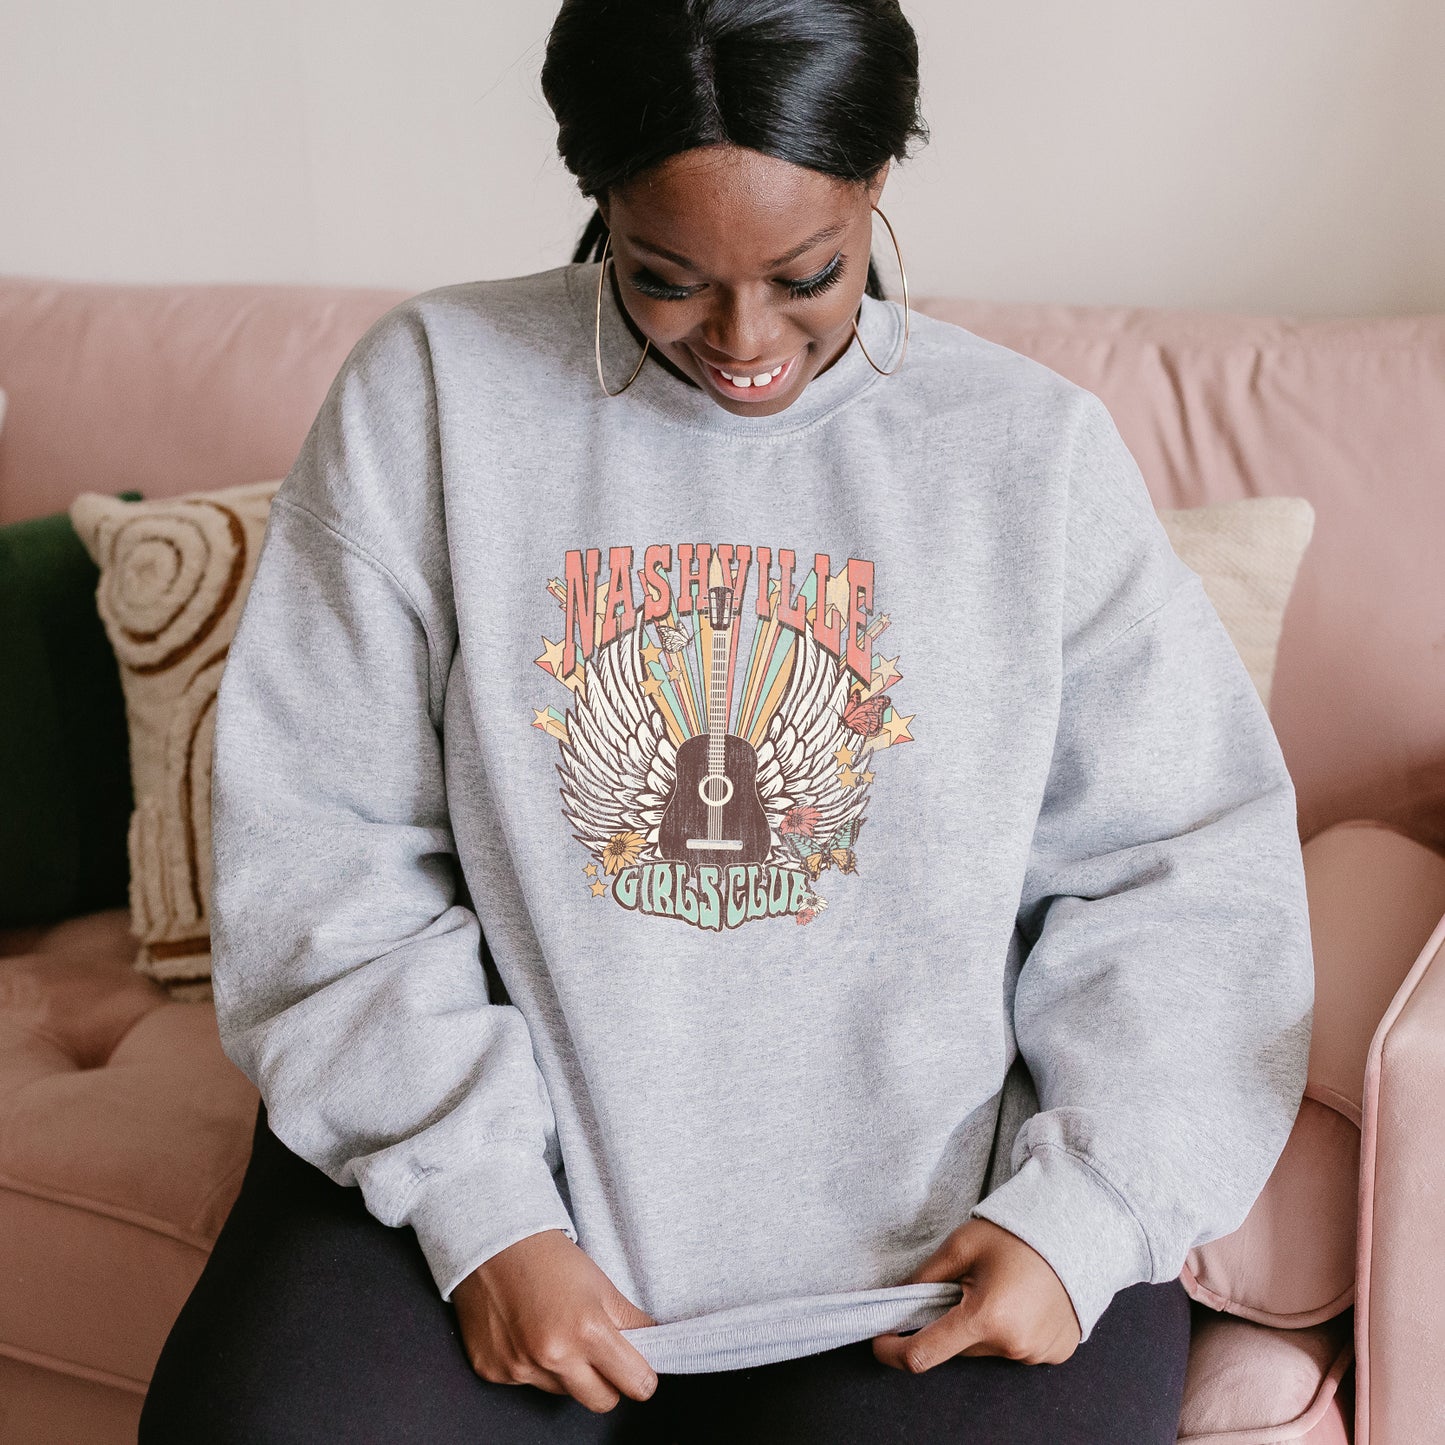 Nashville Girls Club | Plus Size Sweatshirt